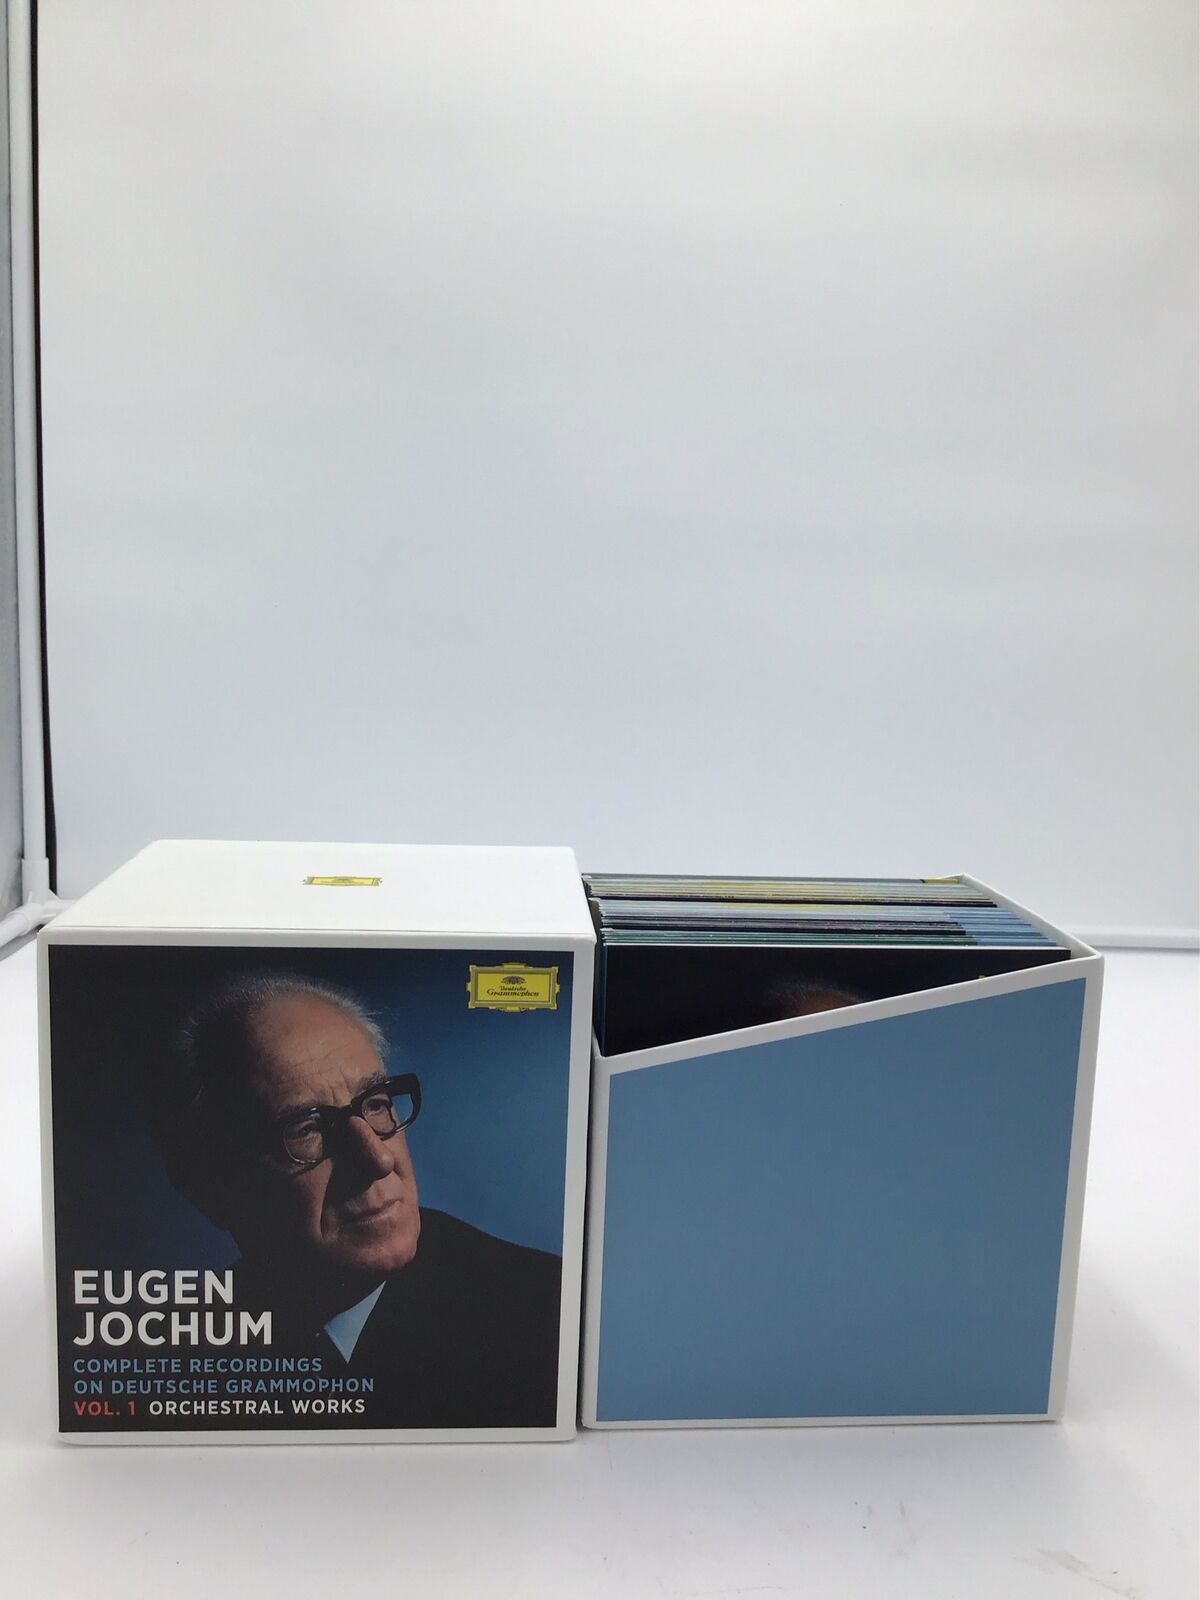 Eugen Jochum Complete Recordings Volume One Orchestral Works, CD Box Set